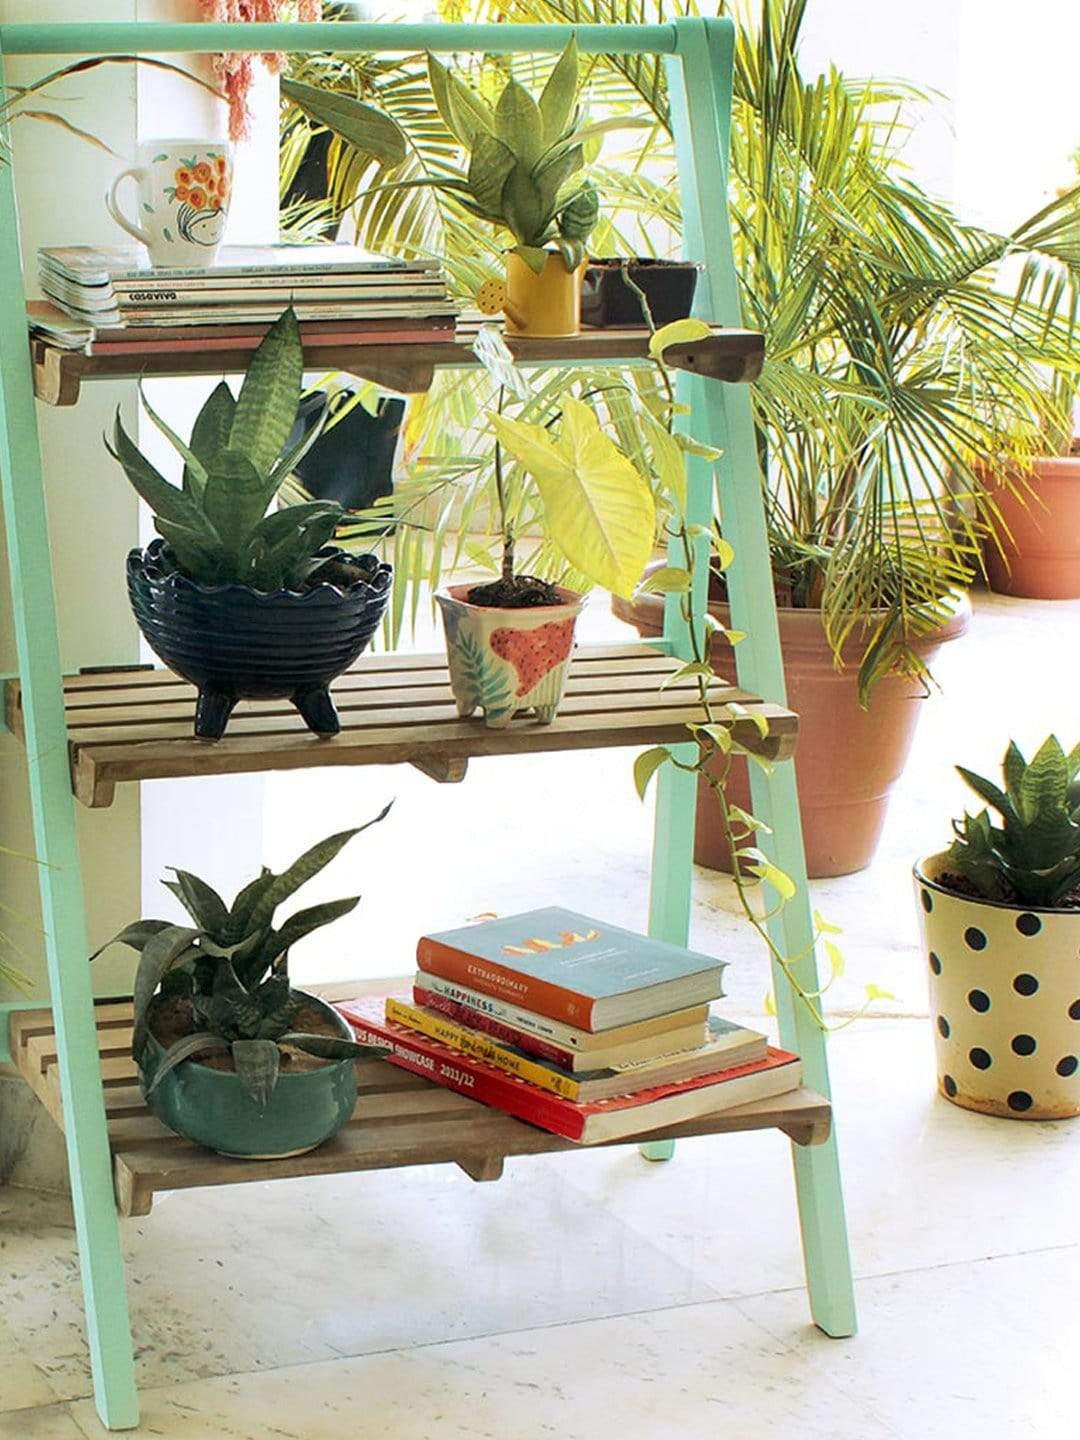 I Beg Your Garden 3 Shelves Rack - The Wishing Chair